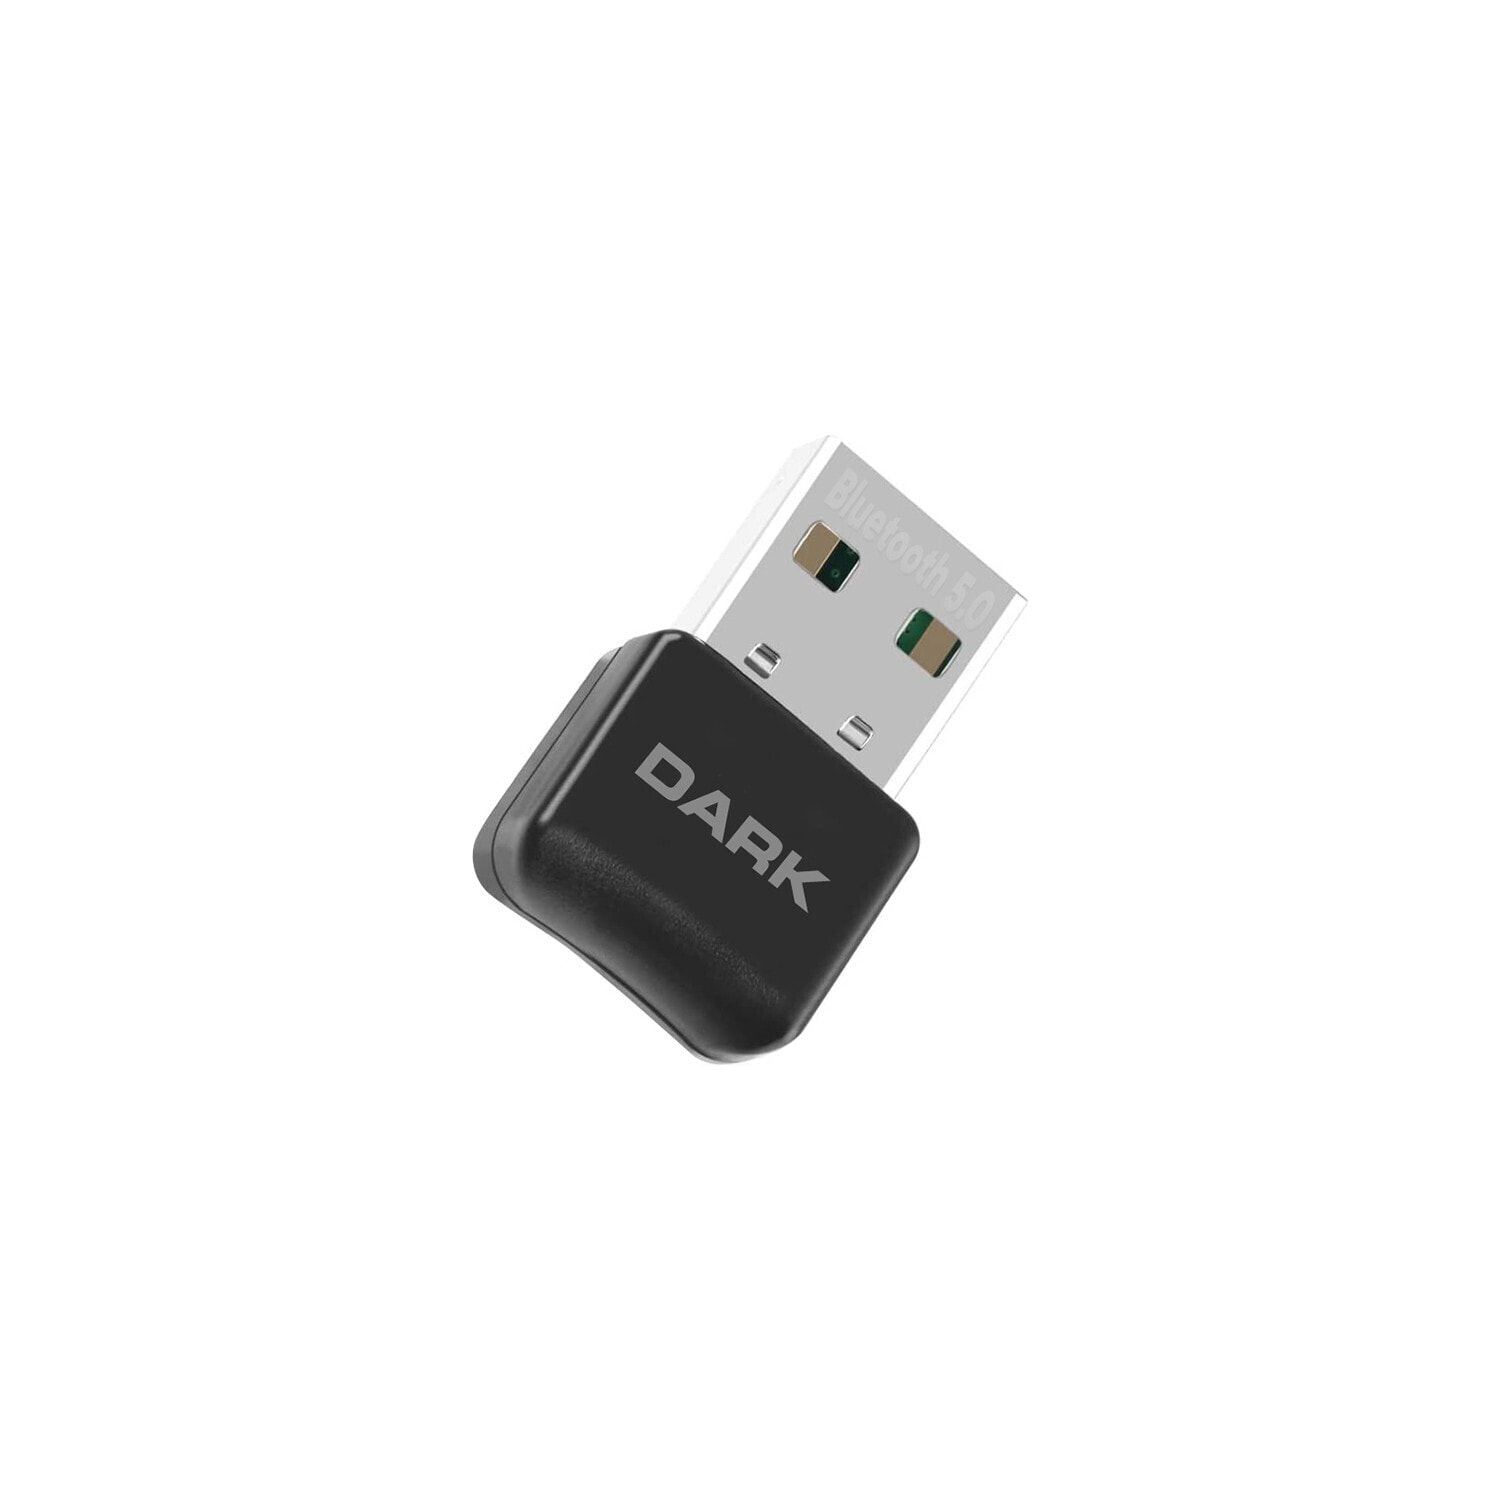 Dark Bluetooth 5.0 Mini Dongle Usb Alıcı (DK-AC-BTU50)